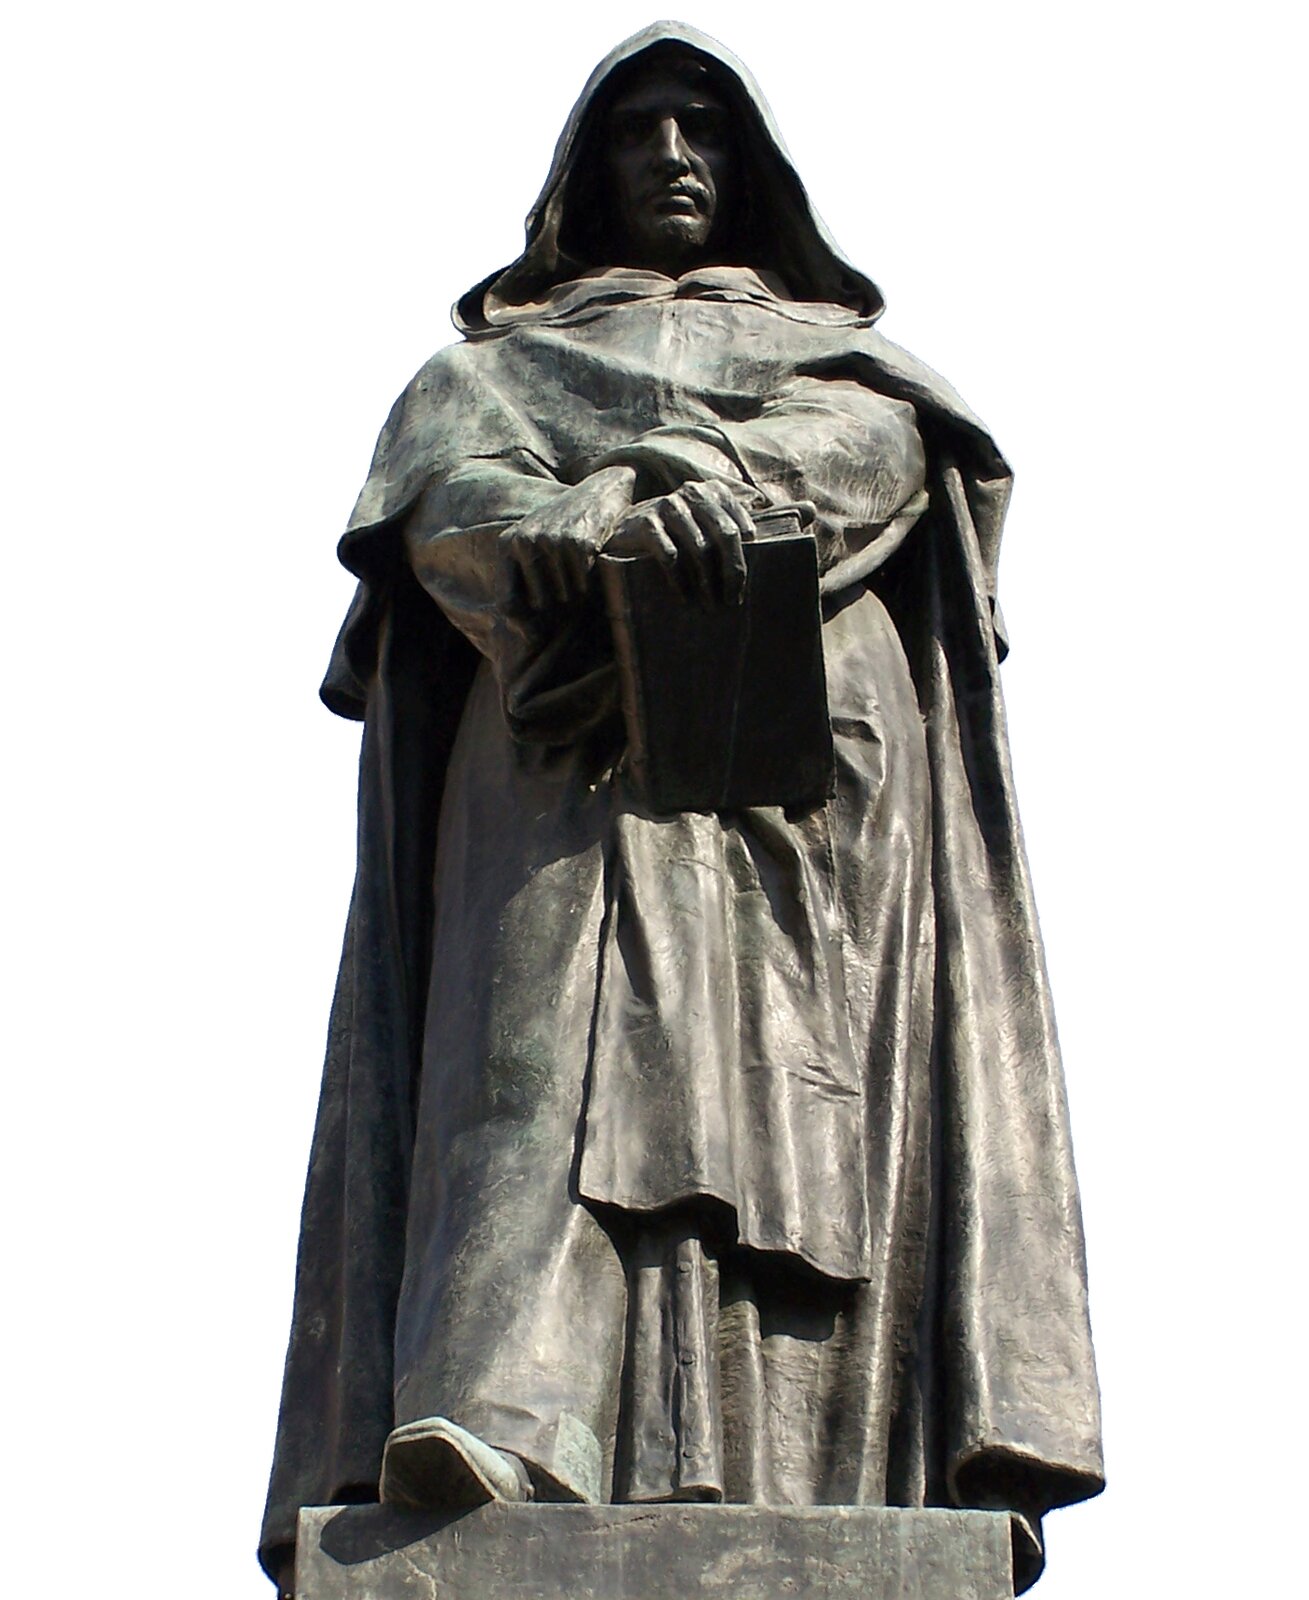 Giordano Bruno Giordano Bruno Źródło: Berthold Werner, licencja: CC BY 3.0.